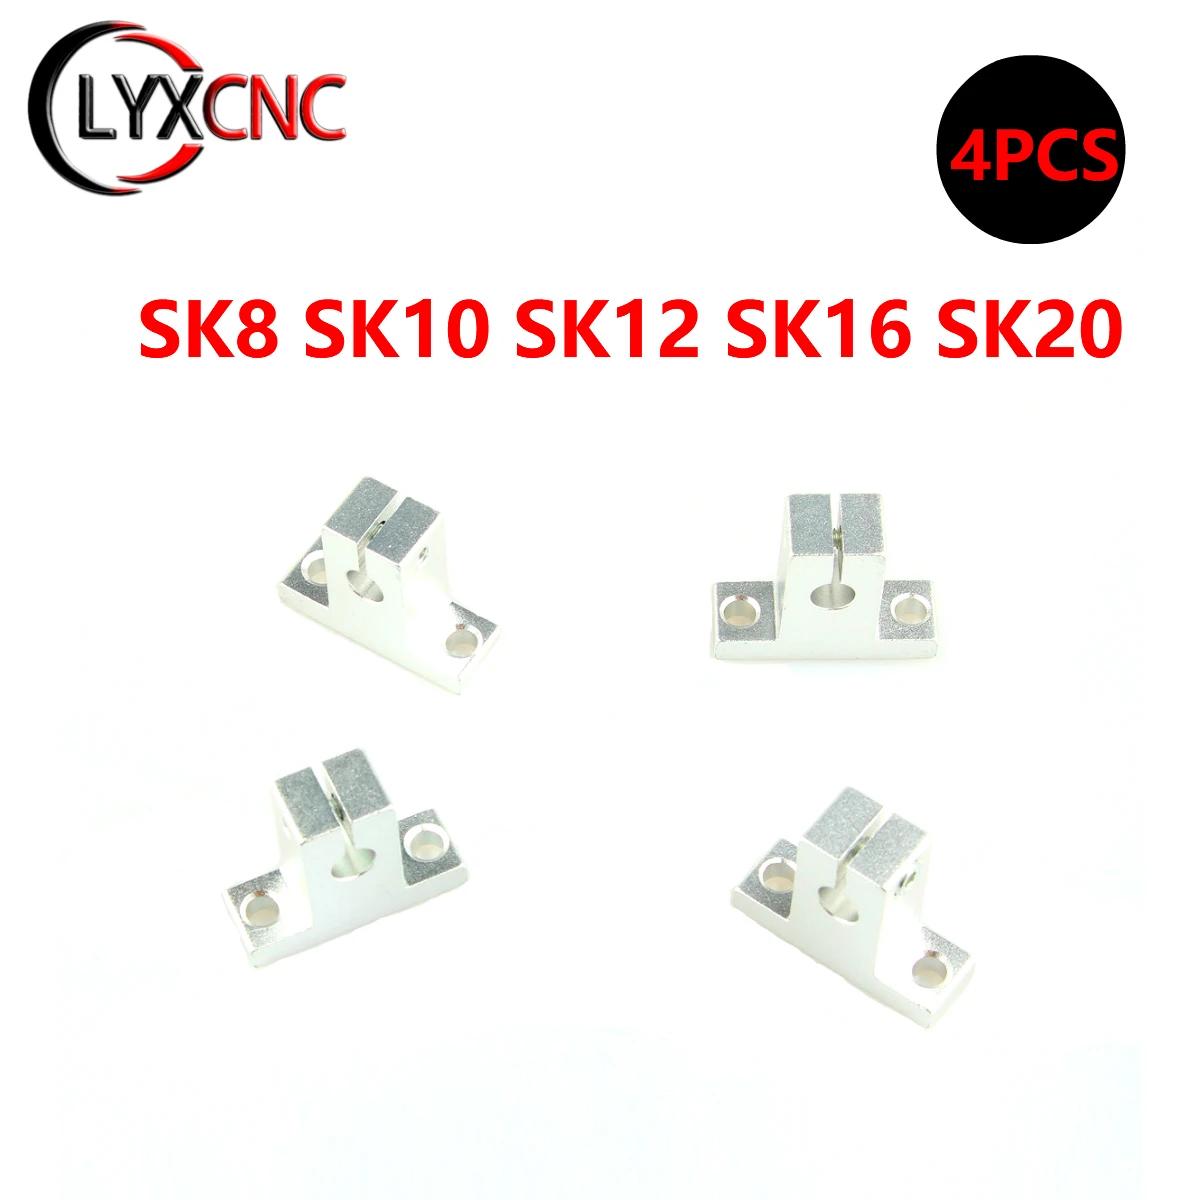 4PCS 8mm 10mm 12mm 16mm 20mm SK8 SK10 SK12 SK16 SK20 Linear Ball Bearing Rail Shaft Support Block XYZ Table CNC 3D Printer Part